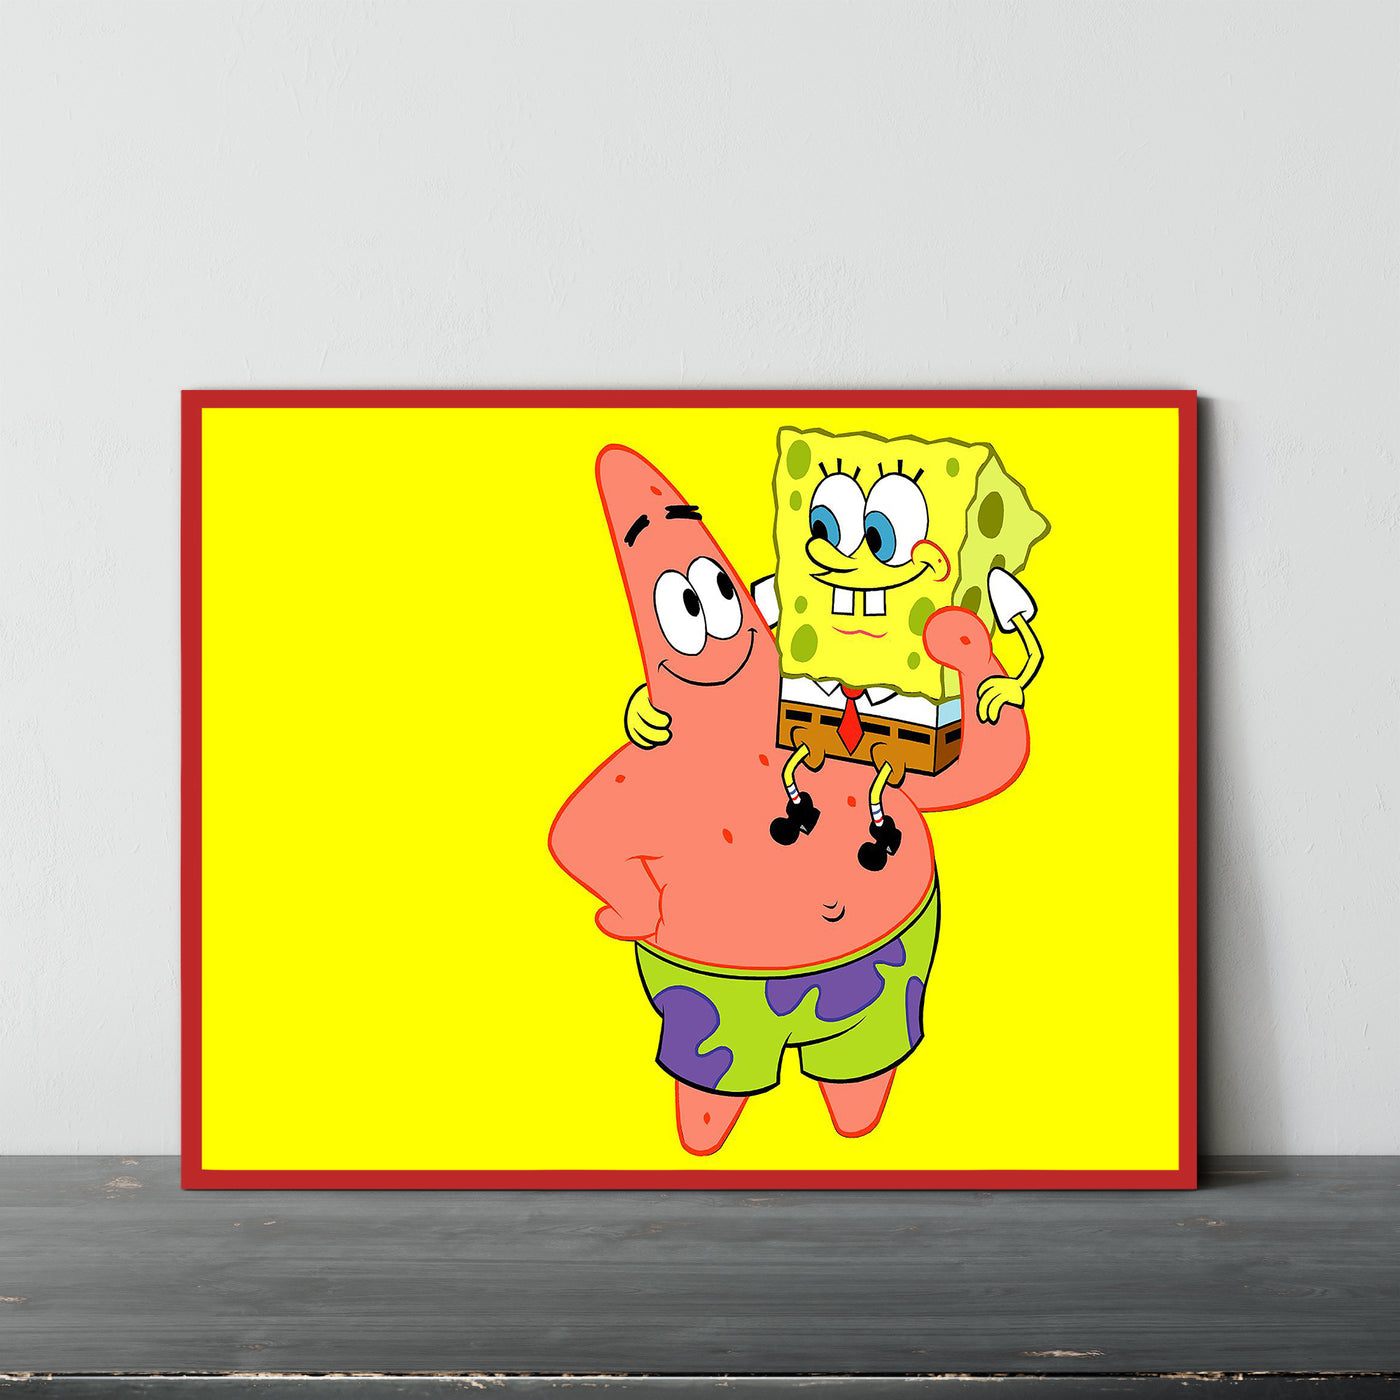 Patrick and Square Sponge Bob